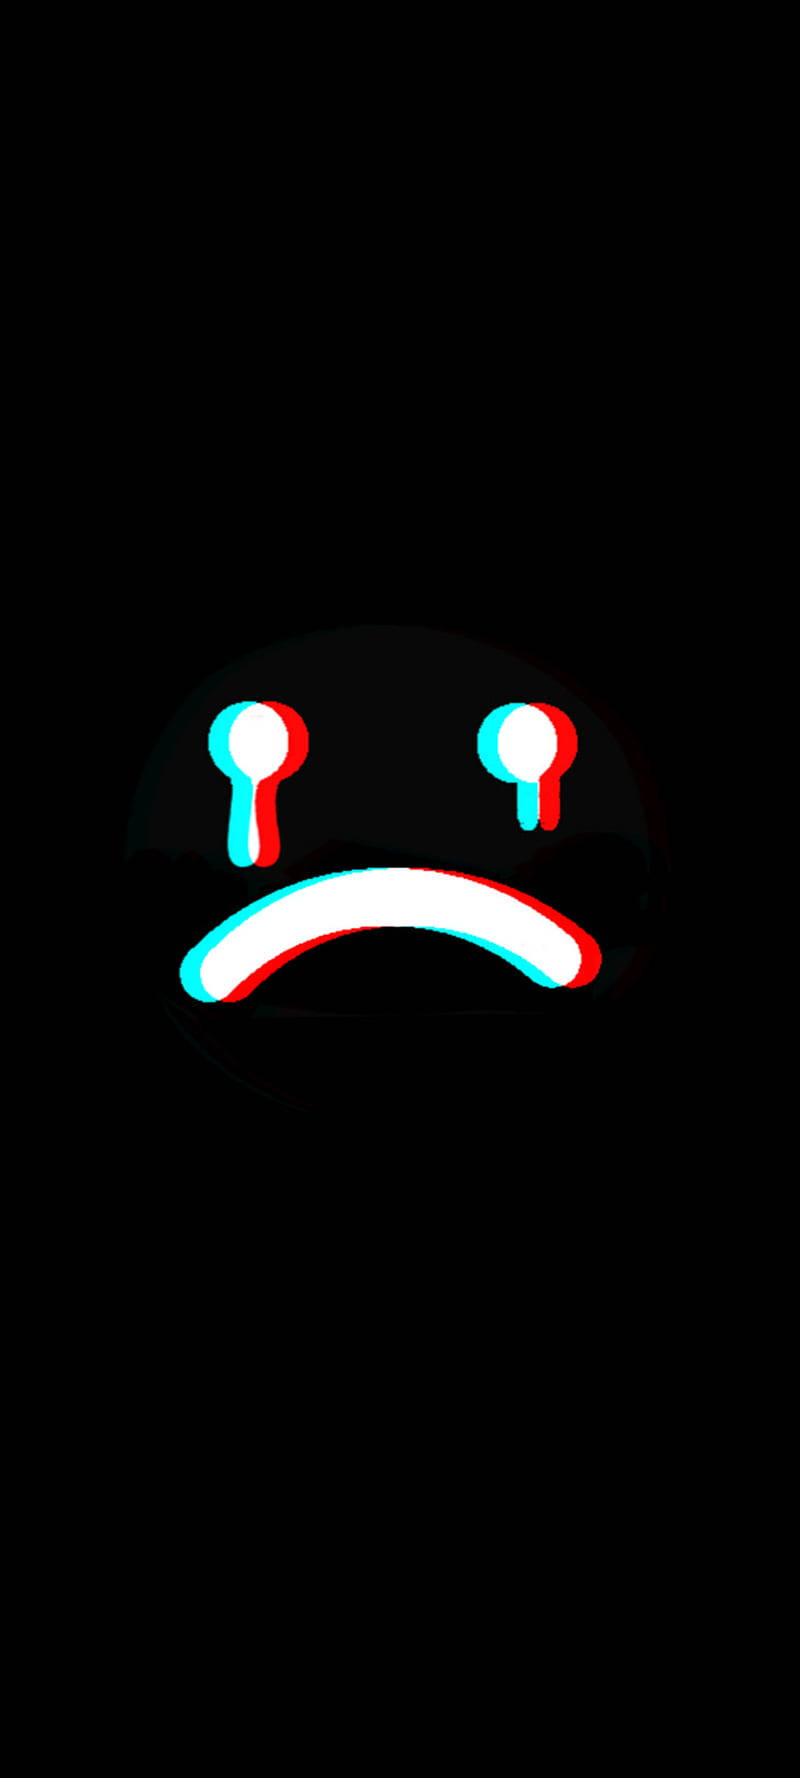 Sad Emoji Face With Tears